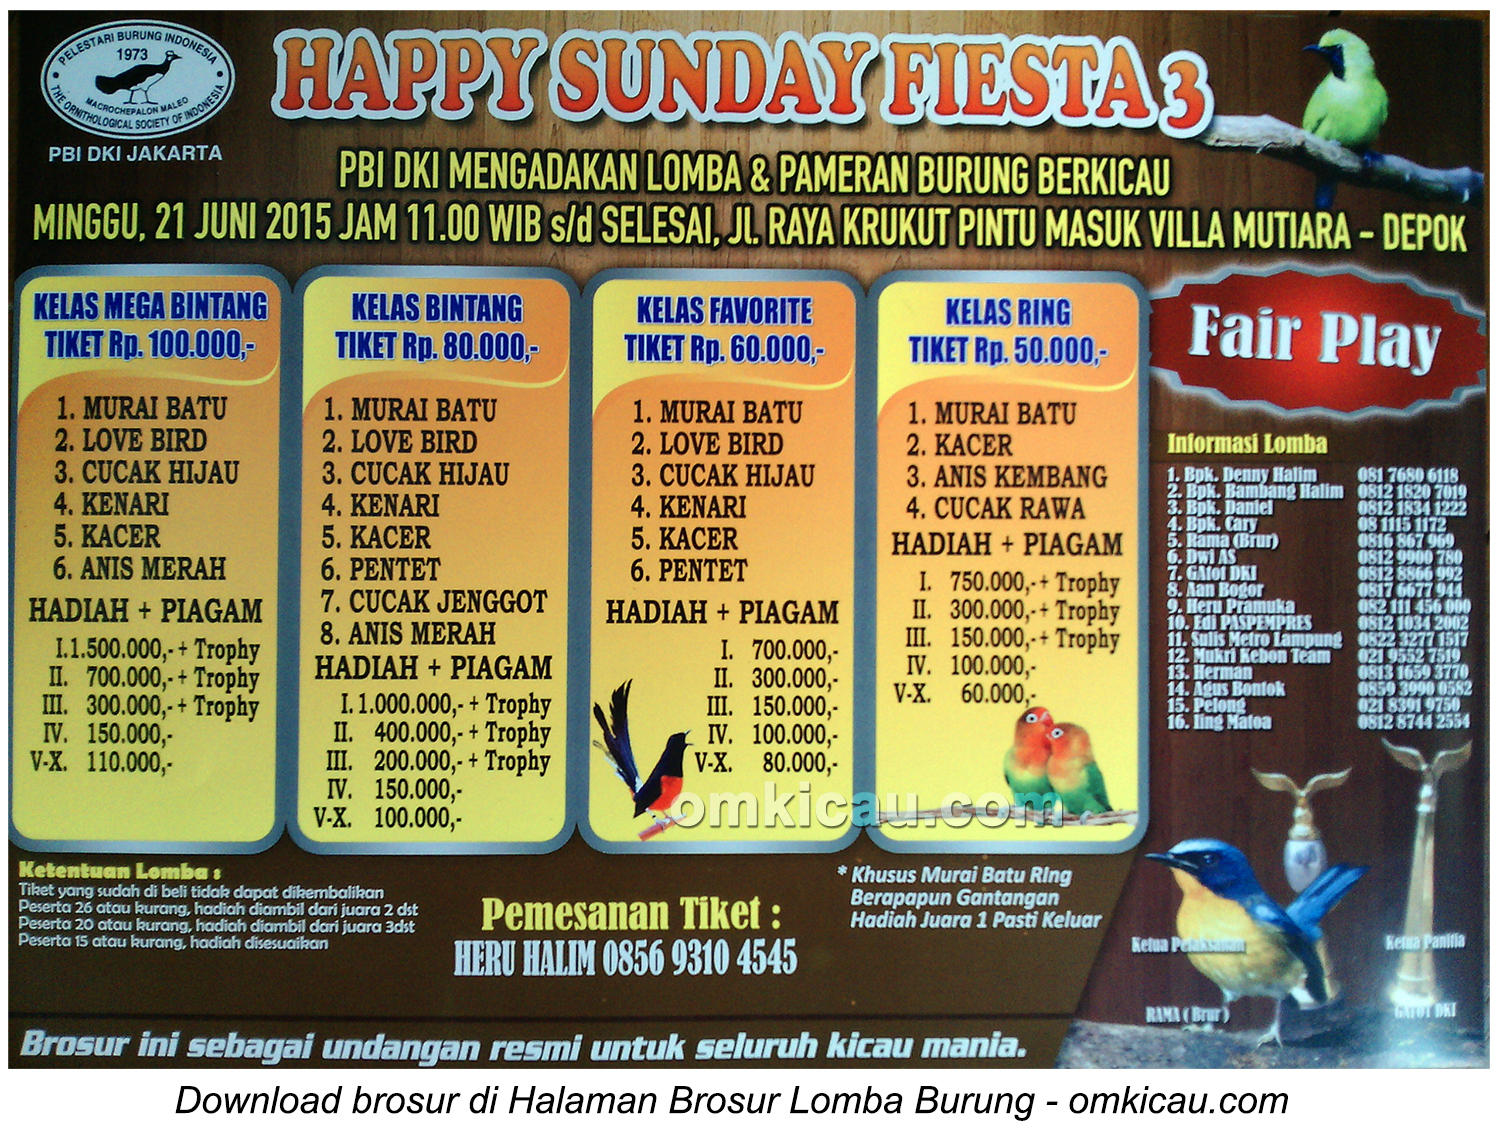 Brosur Lomba Burung Berkicau Happy Sunday Fiesta PBI DKI Jakarta, Depok, 21 Juni 2015